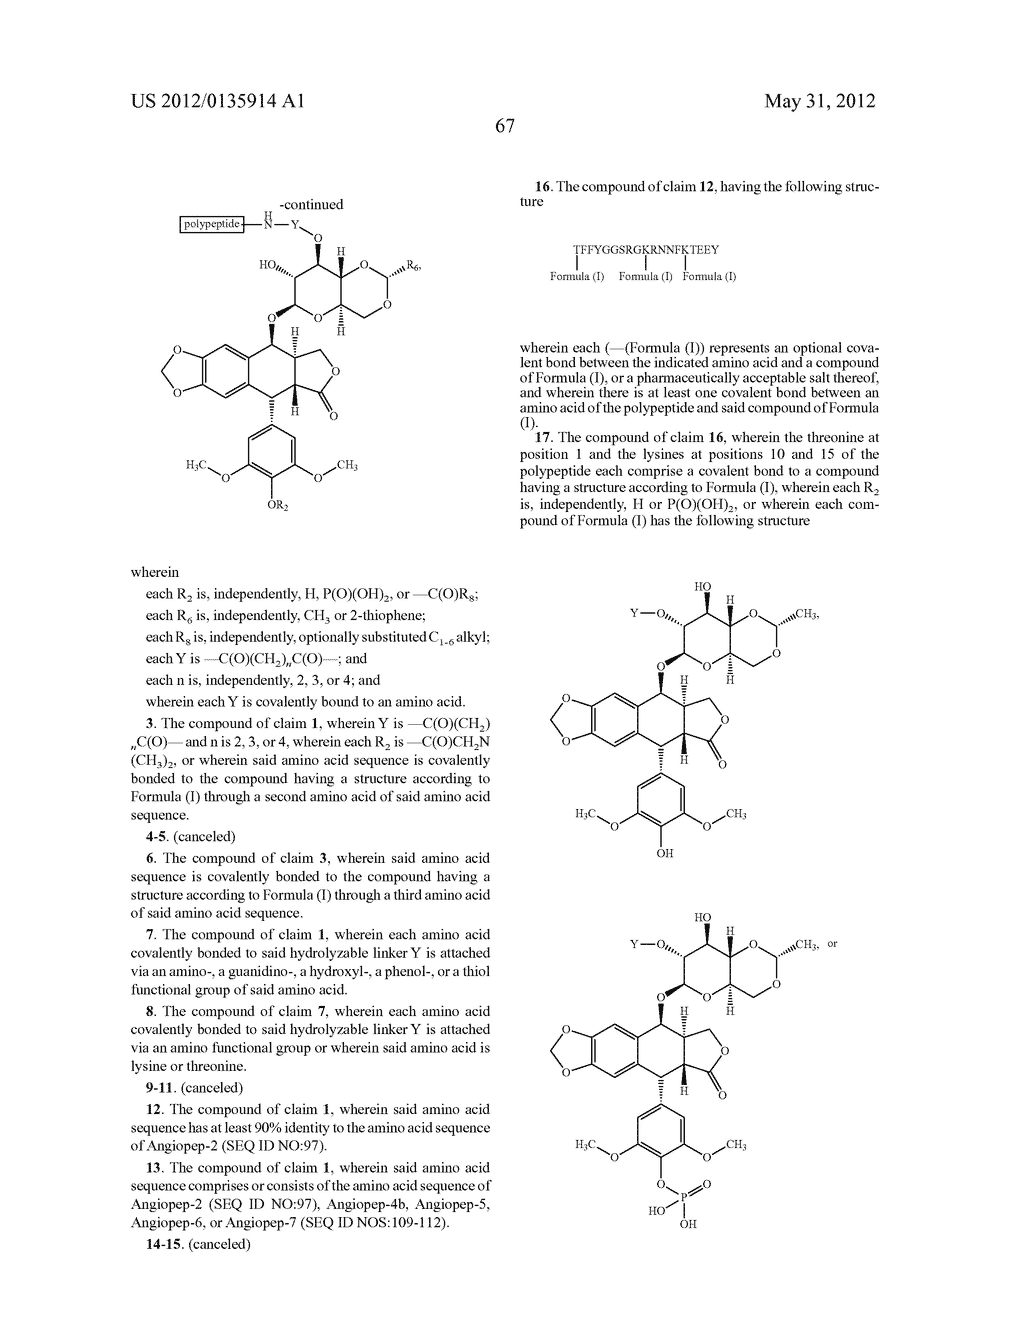 ETOPOSIDE AND DOXORUBICIN CONJUGATES FOR DRUG DELIVERY - diagram, schematic, and image 83